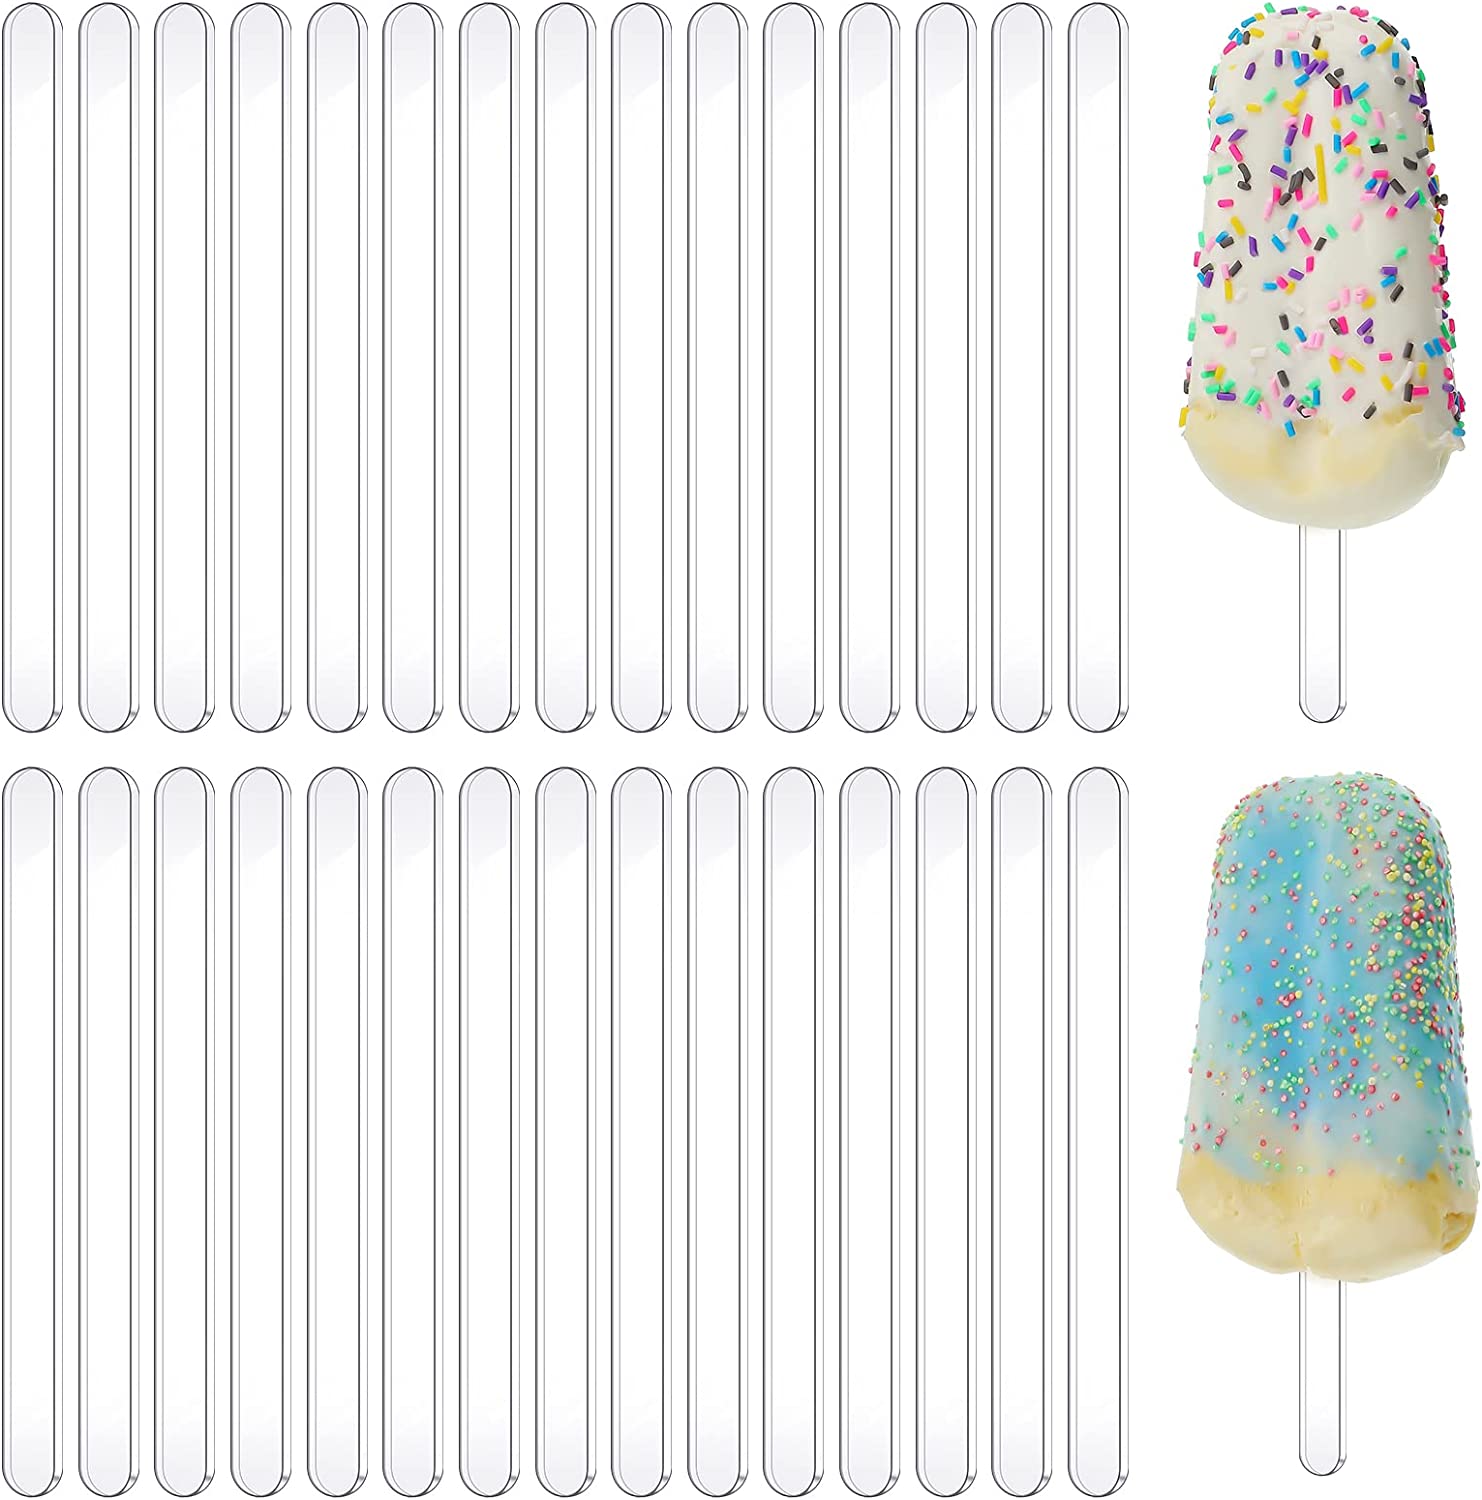  Acrylic Cakesicle Ice Cream Sticks,Reusable Cakesicle